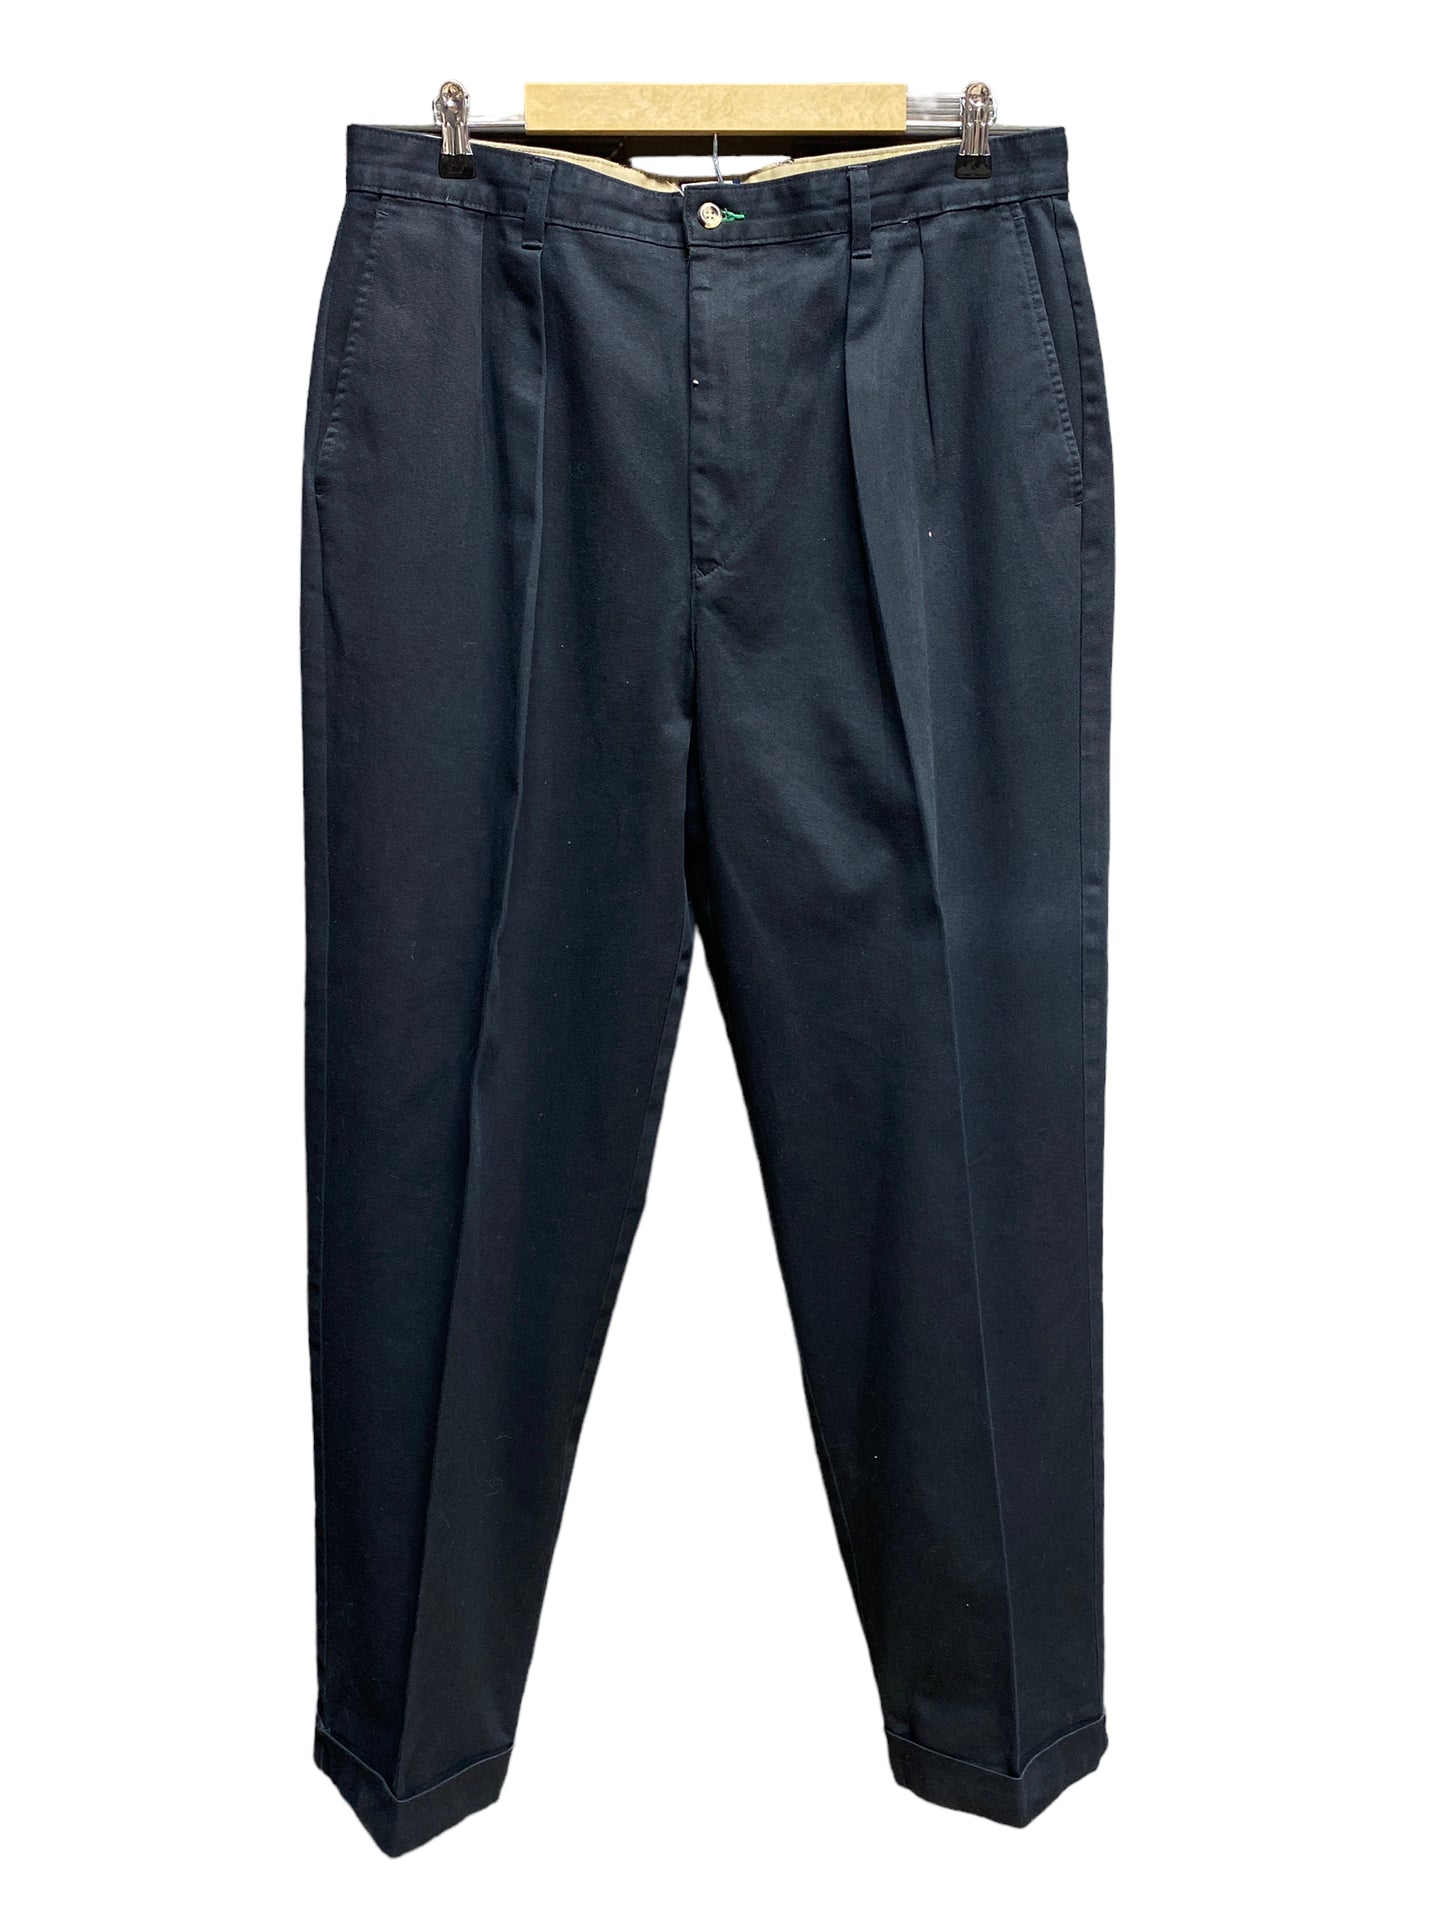 Vintage Tommy Hilfiger Pleated Slacks Black Trousers Size 38x36